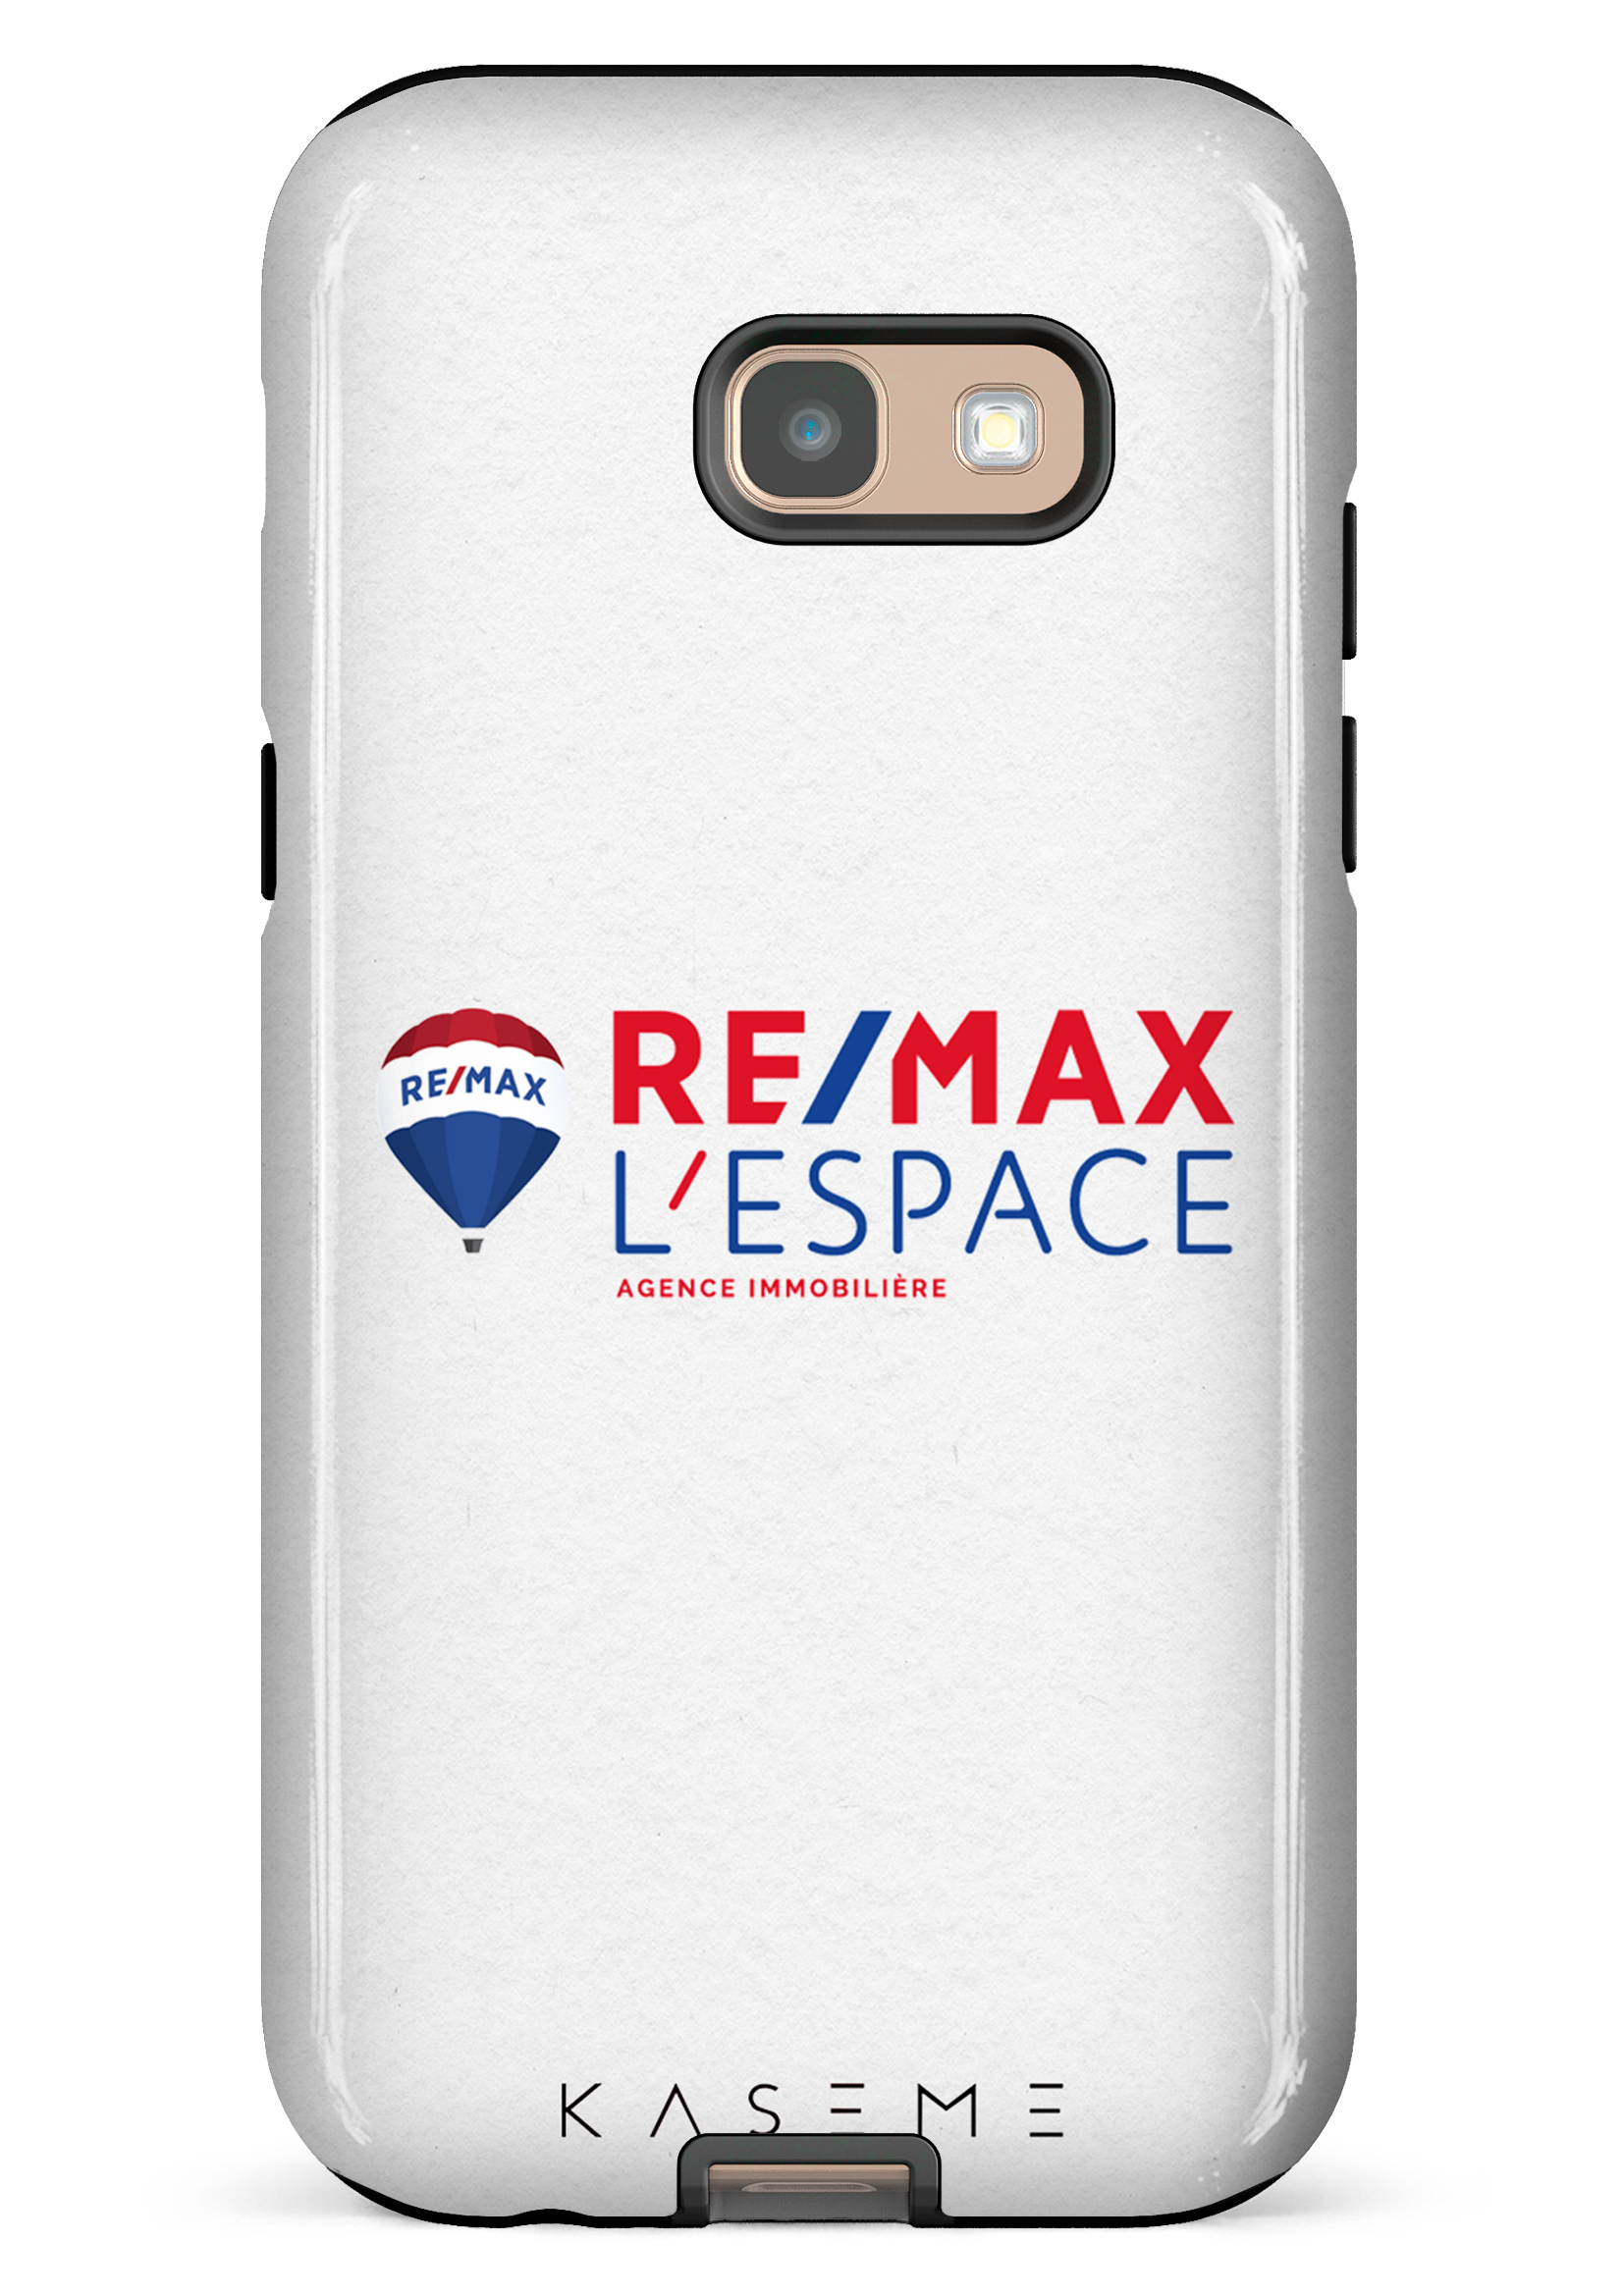 Remax L'Espace Blanc - Galaxy A5 (2017)